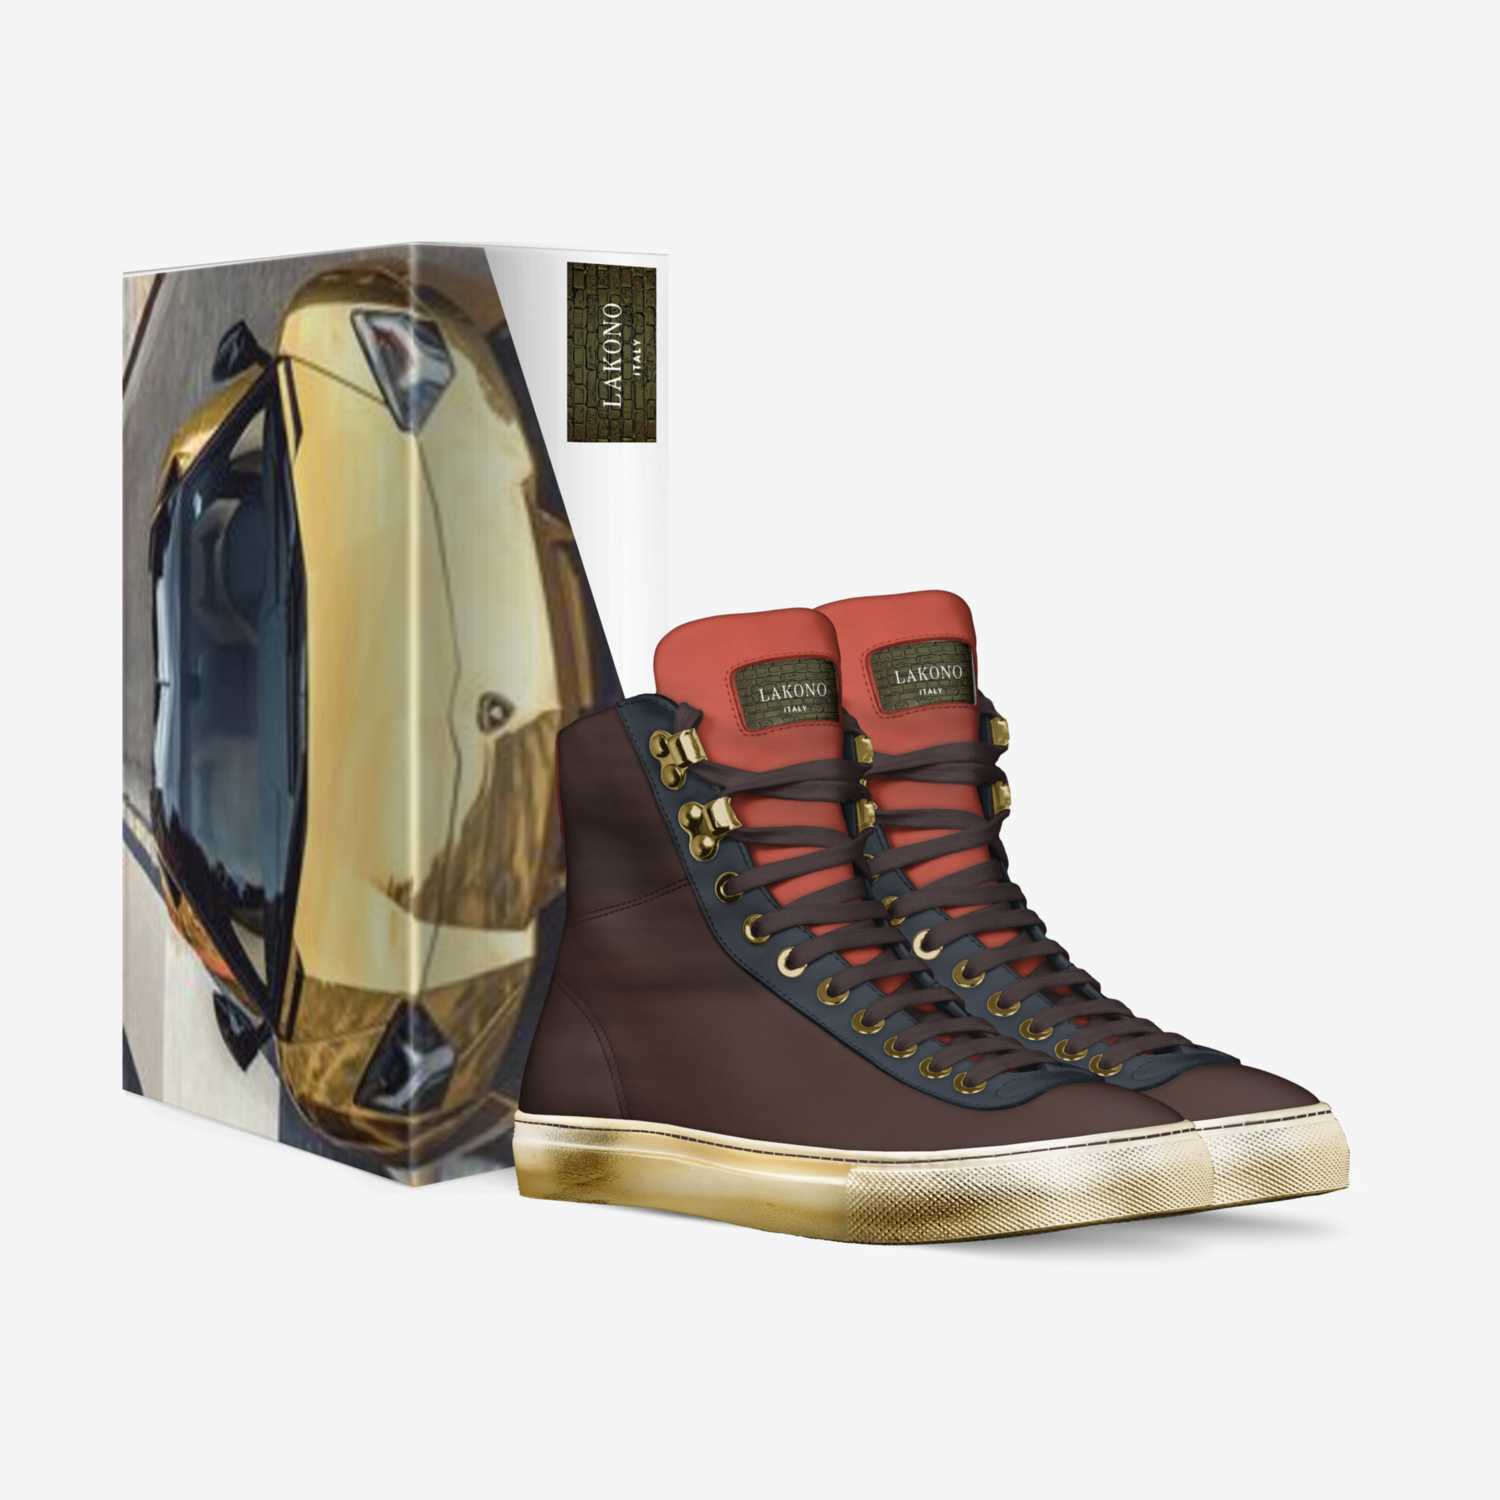 LAKONO - HT2 custom made in Italy shoes by Jason Bethea-settle | Box view